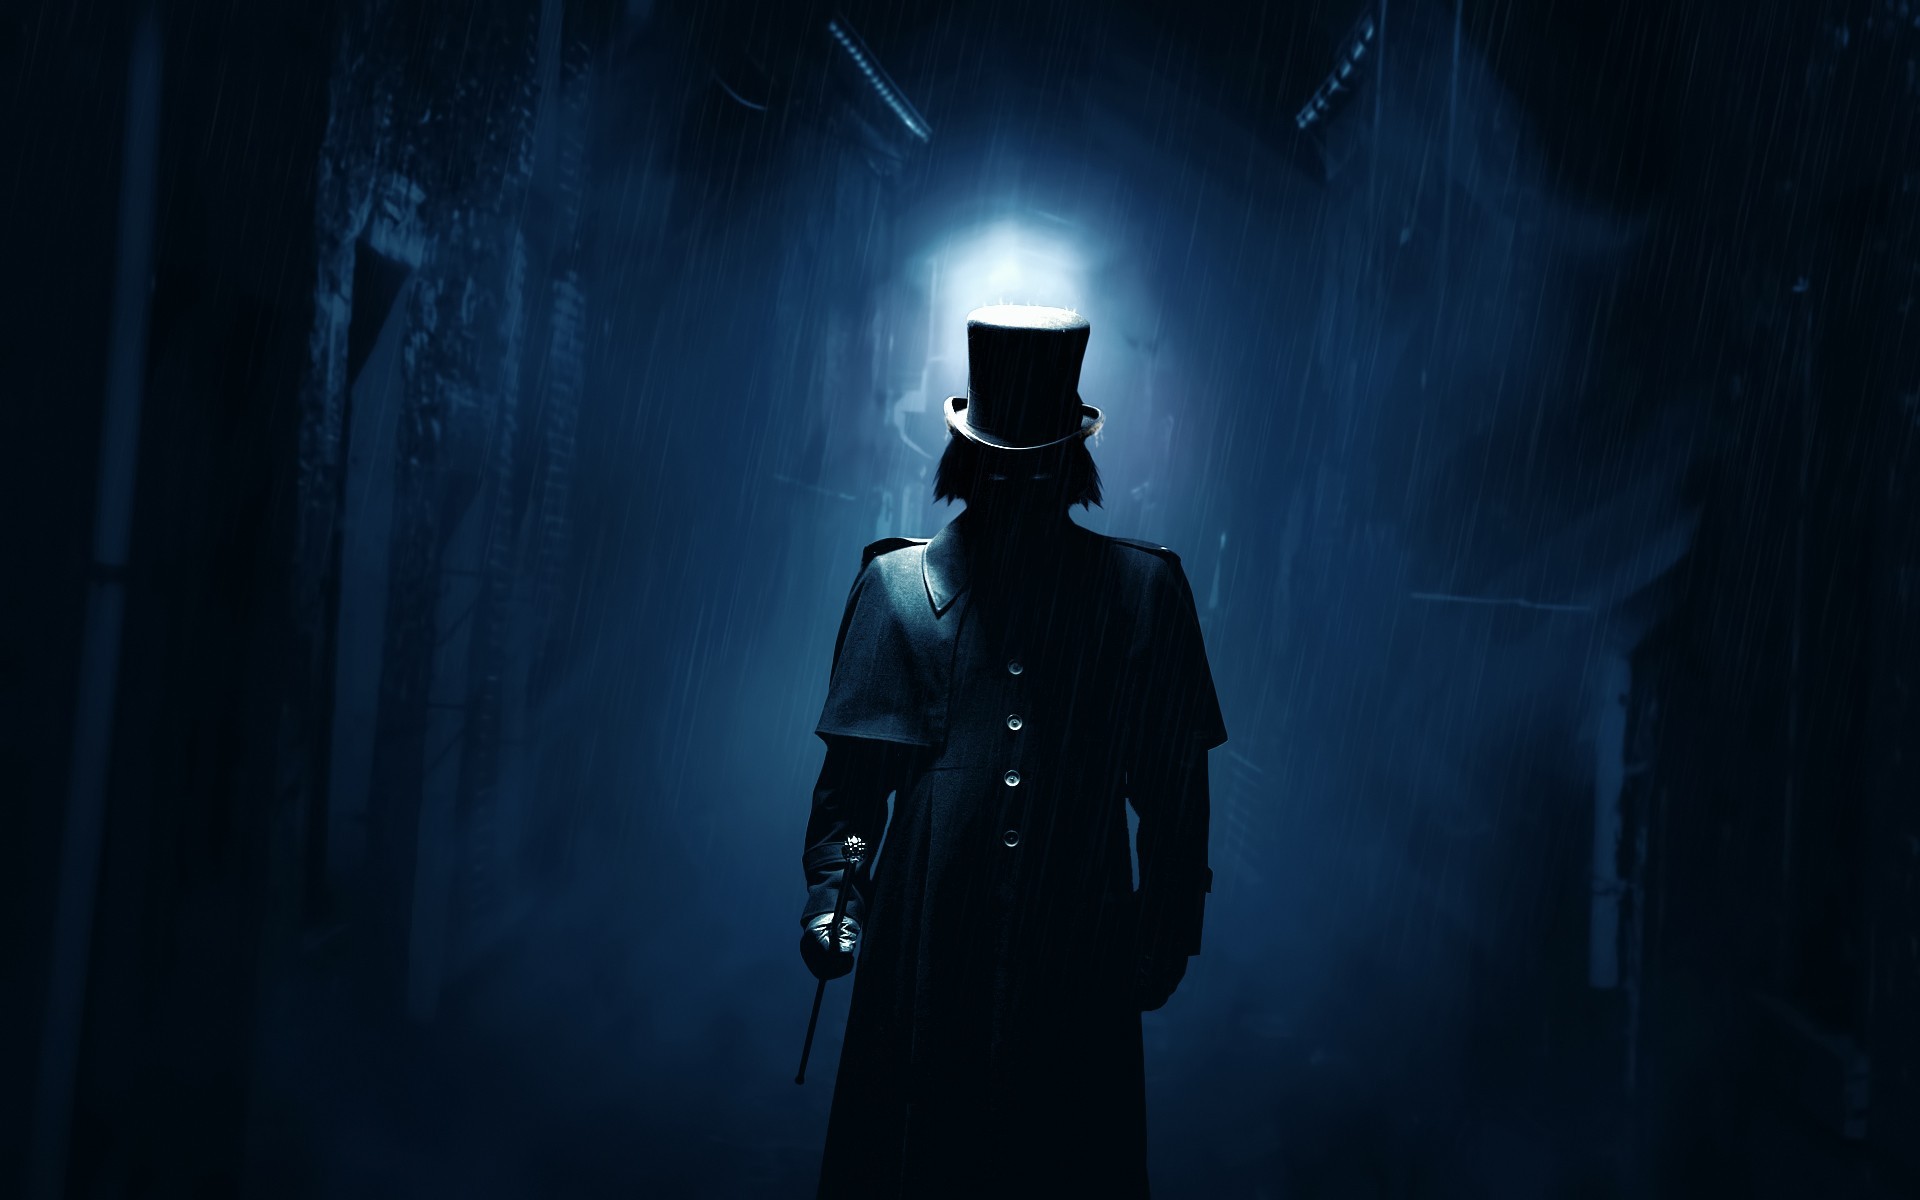 Artwork Fantasy Art Digital Art Jack The Ripper Dark Top Hat Suits Alleyway Blue 1920x1200